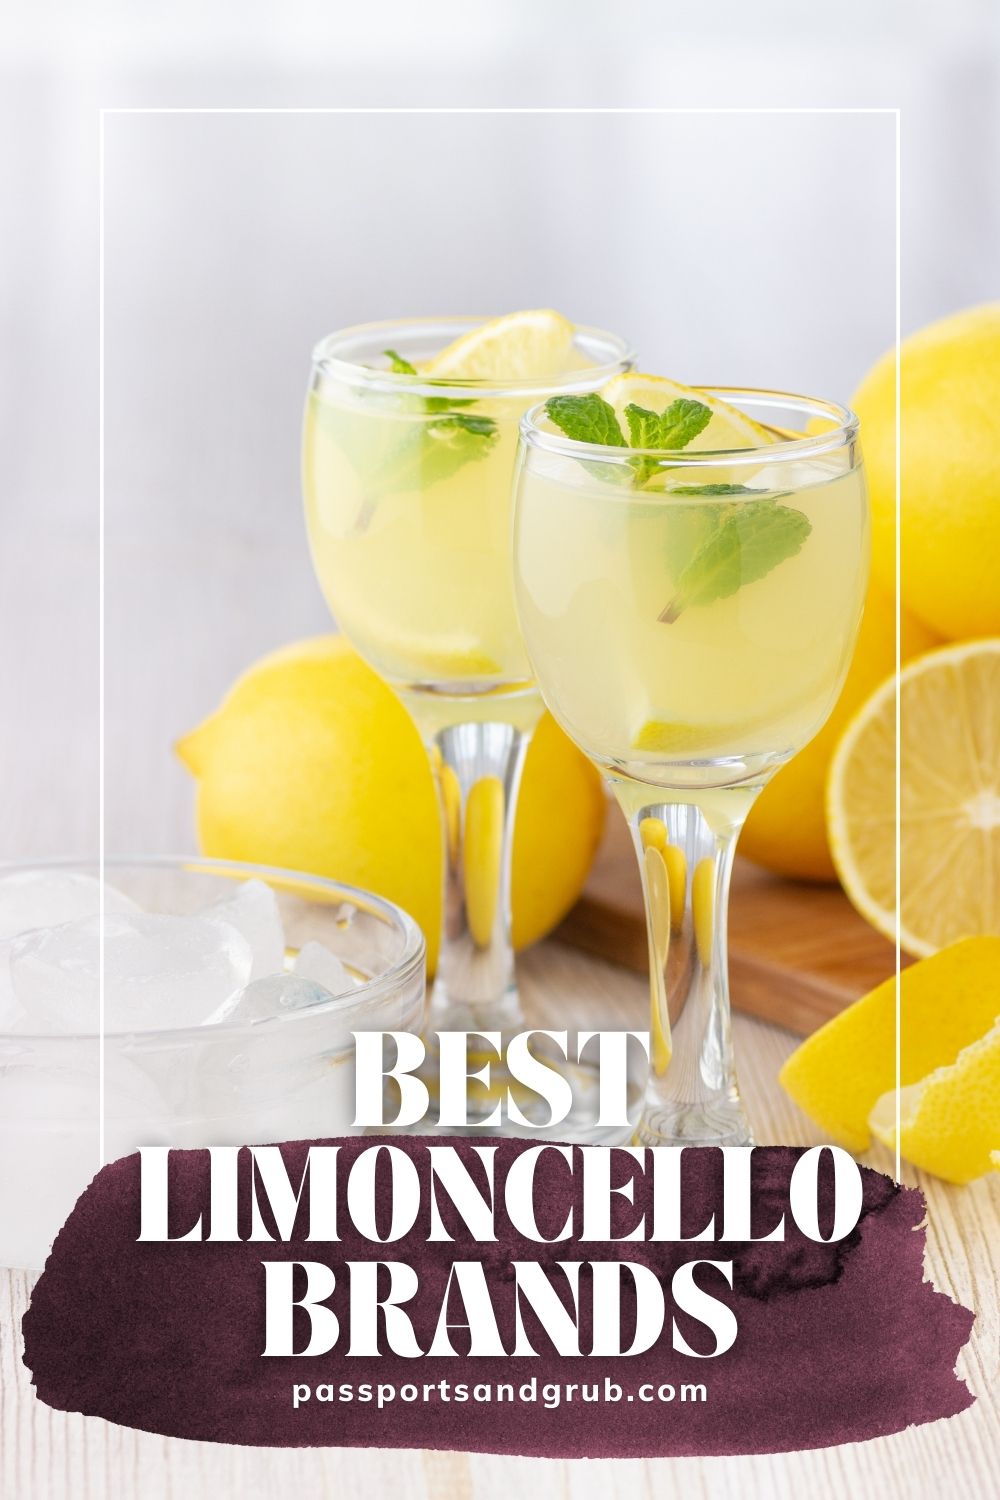 Best Limoncello brands